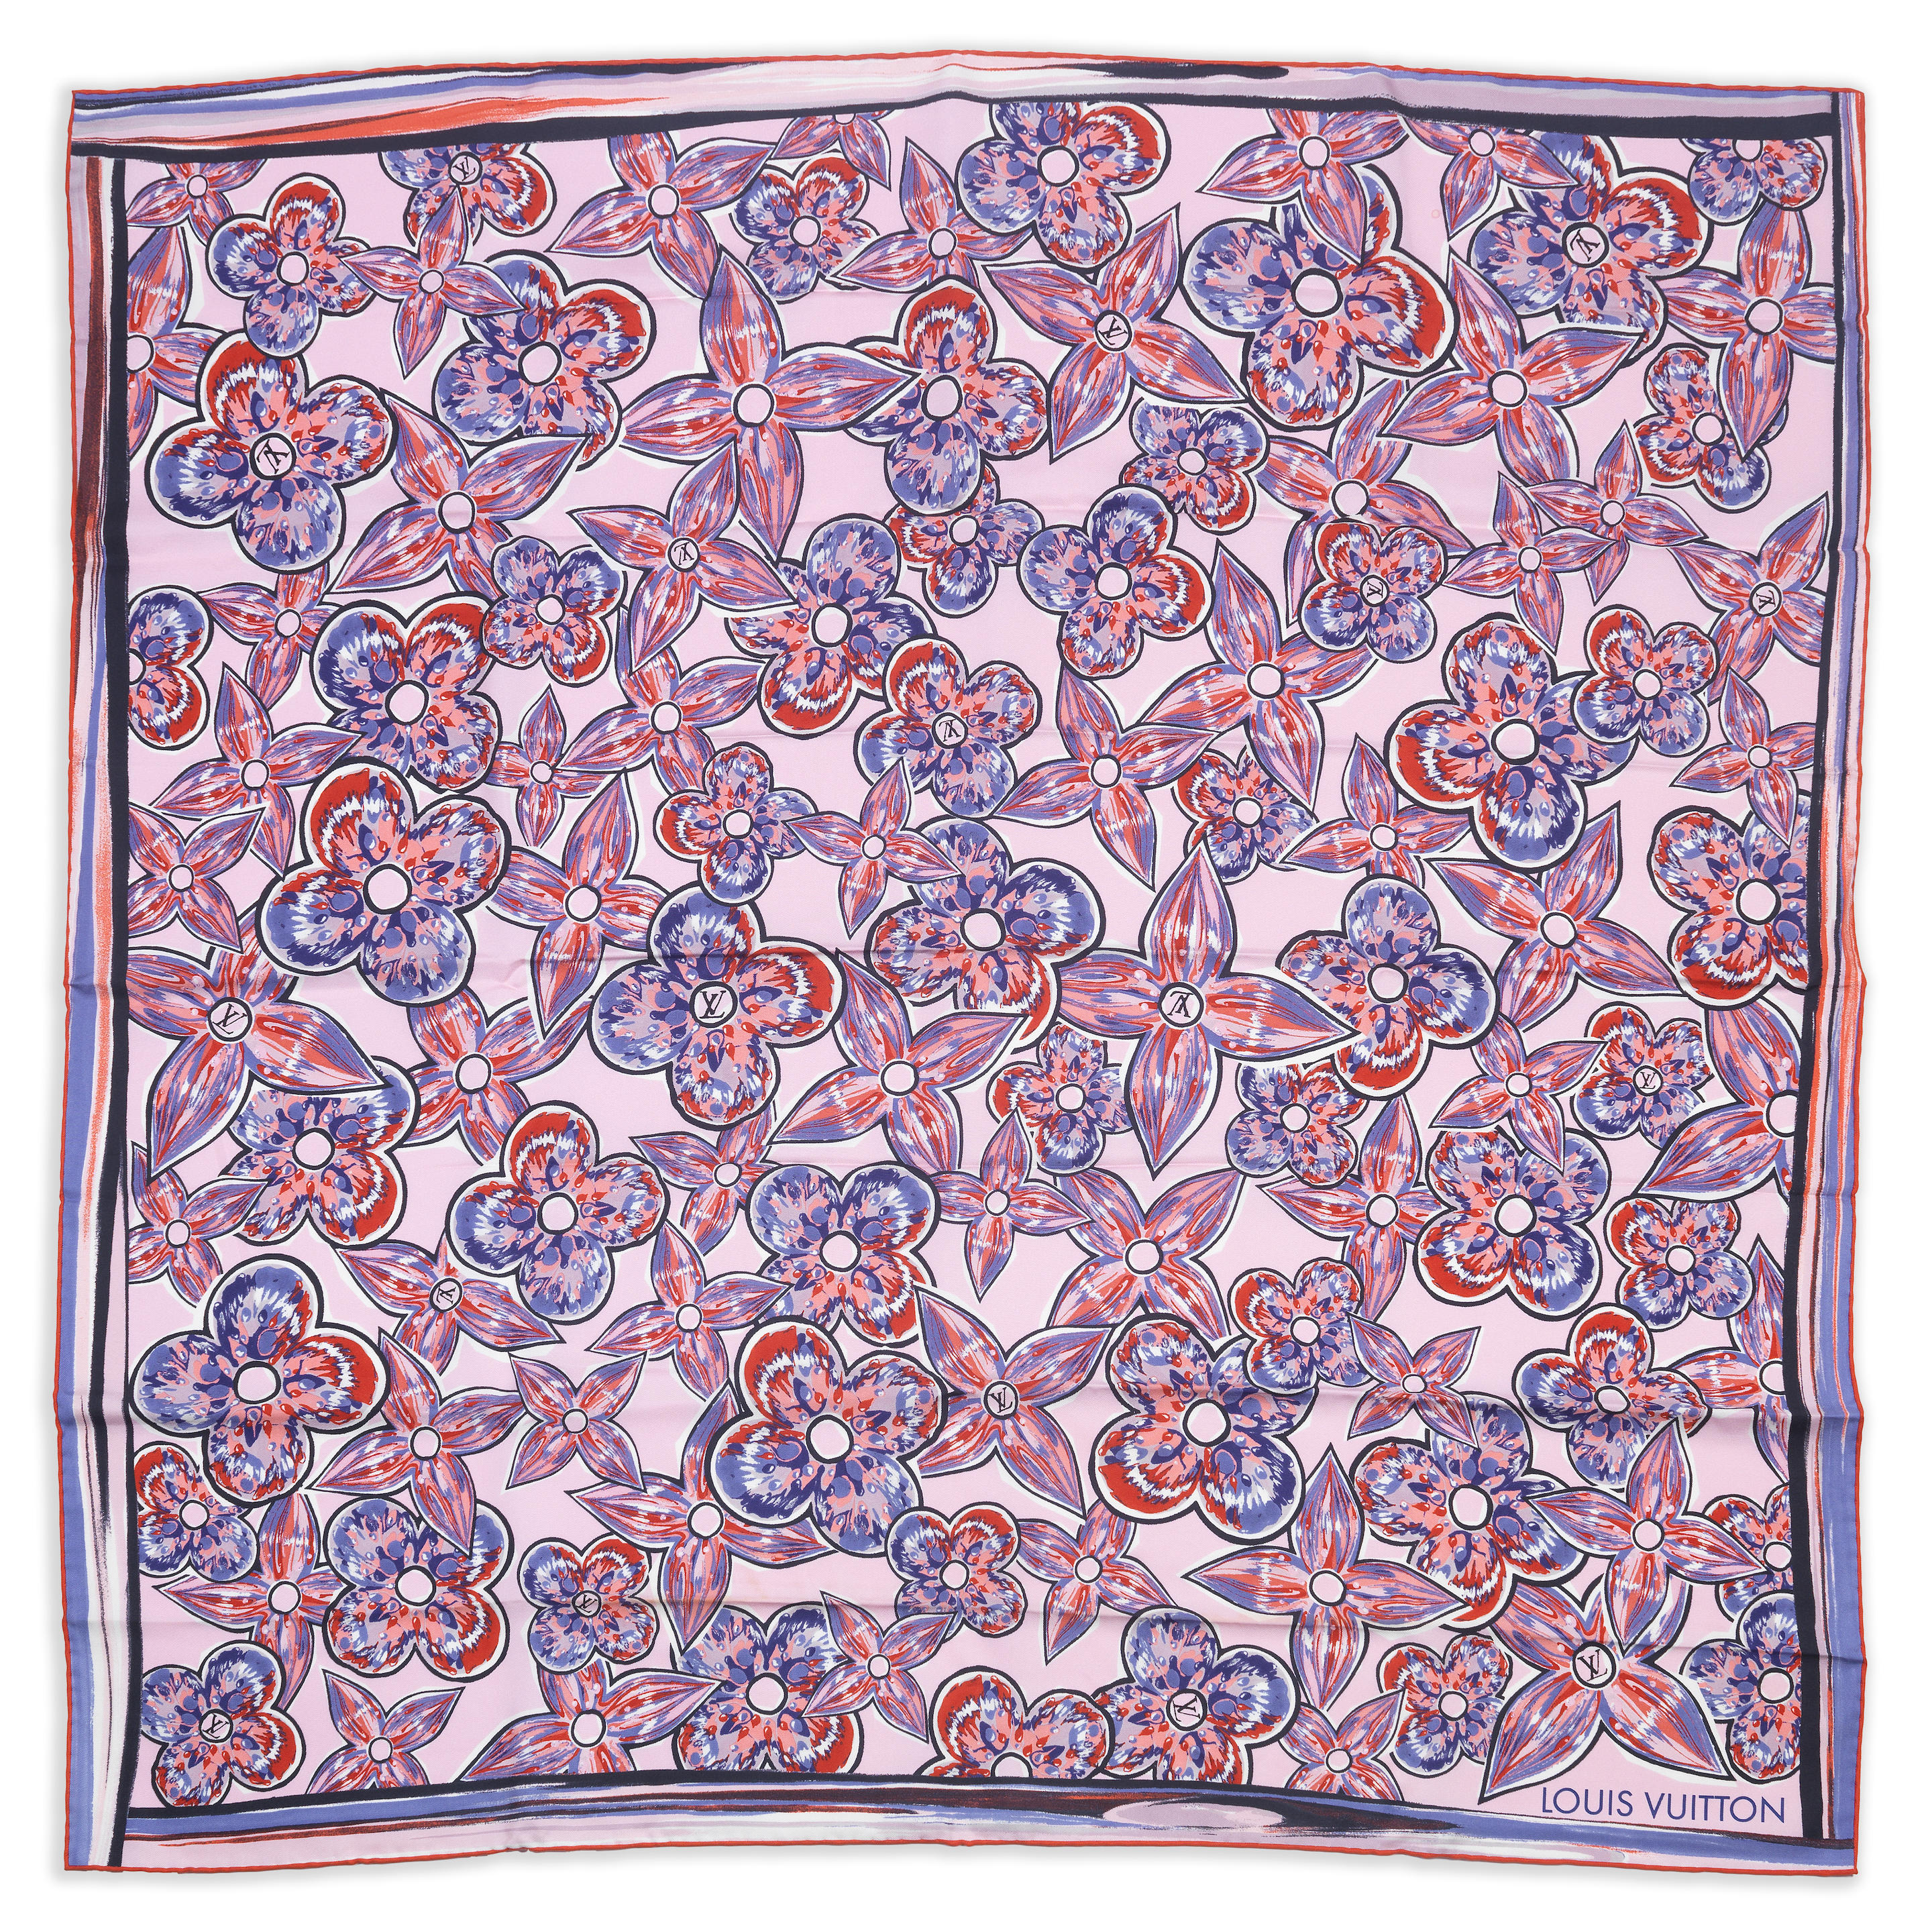 Sold at Auction: Louis Vuitton, Louis Vuitton Monogram Pattern Silk Scarf